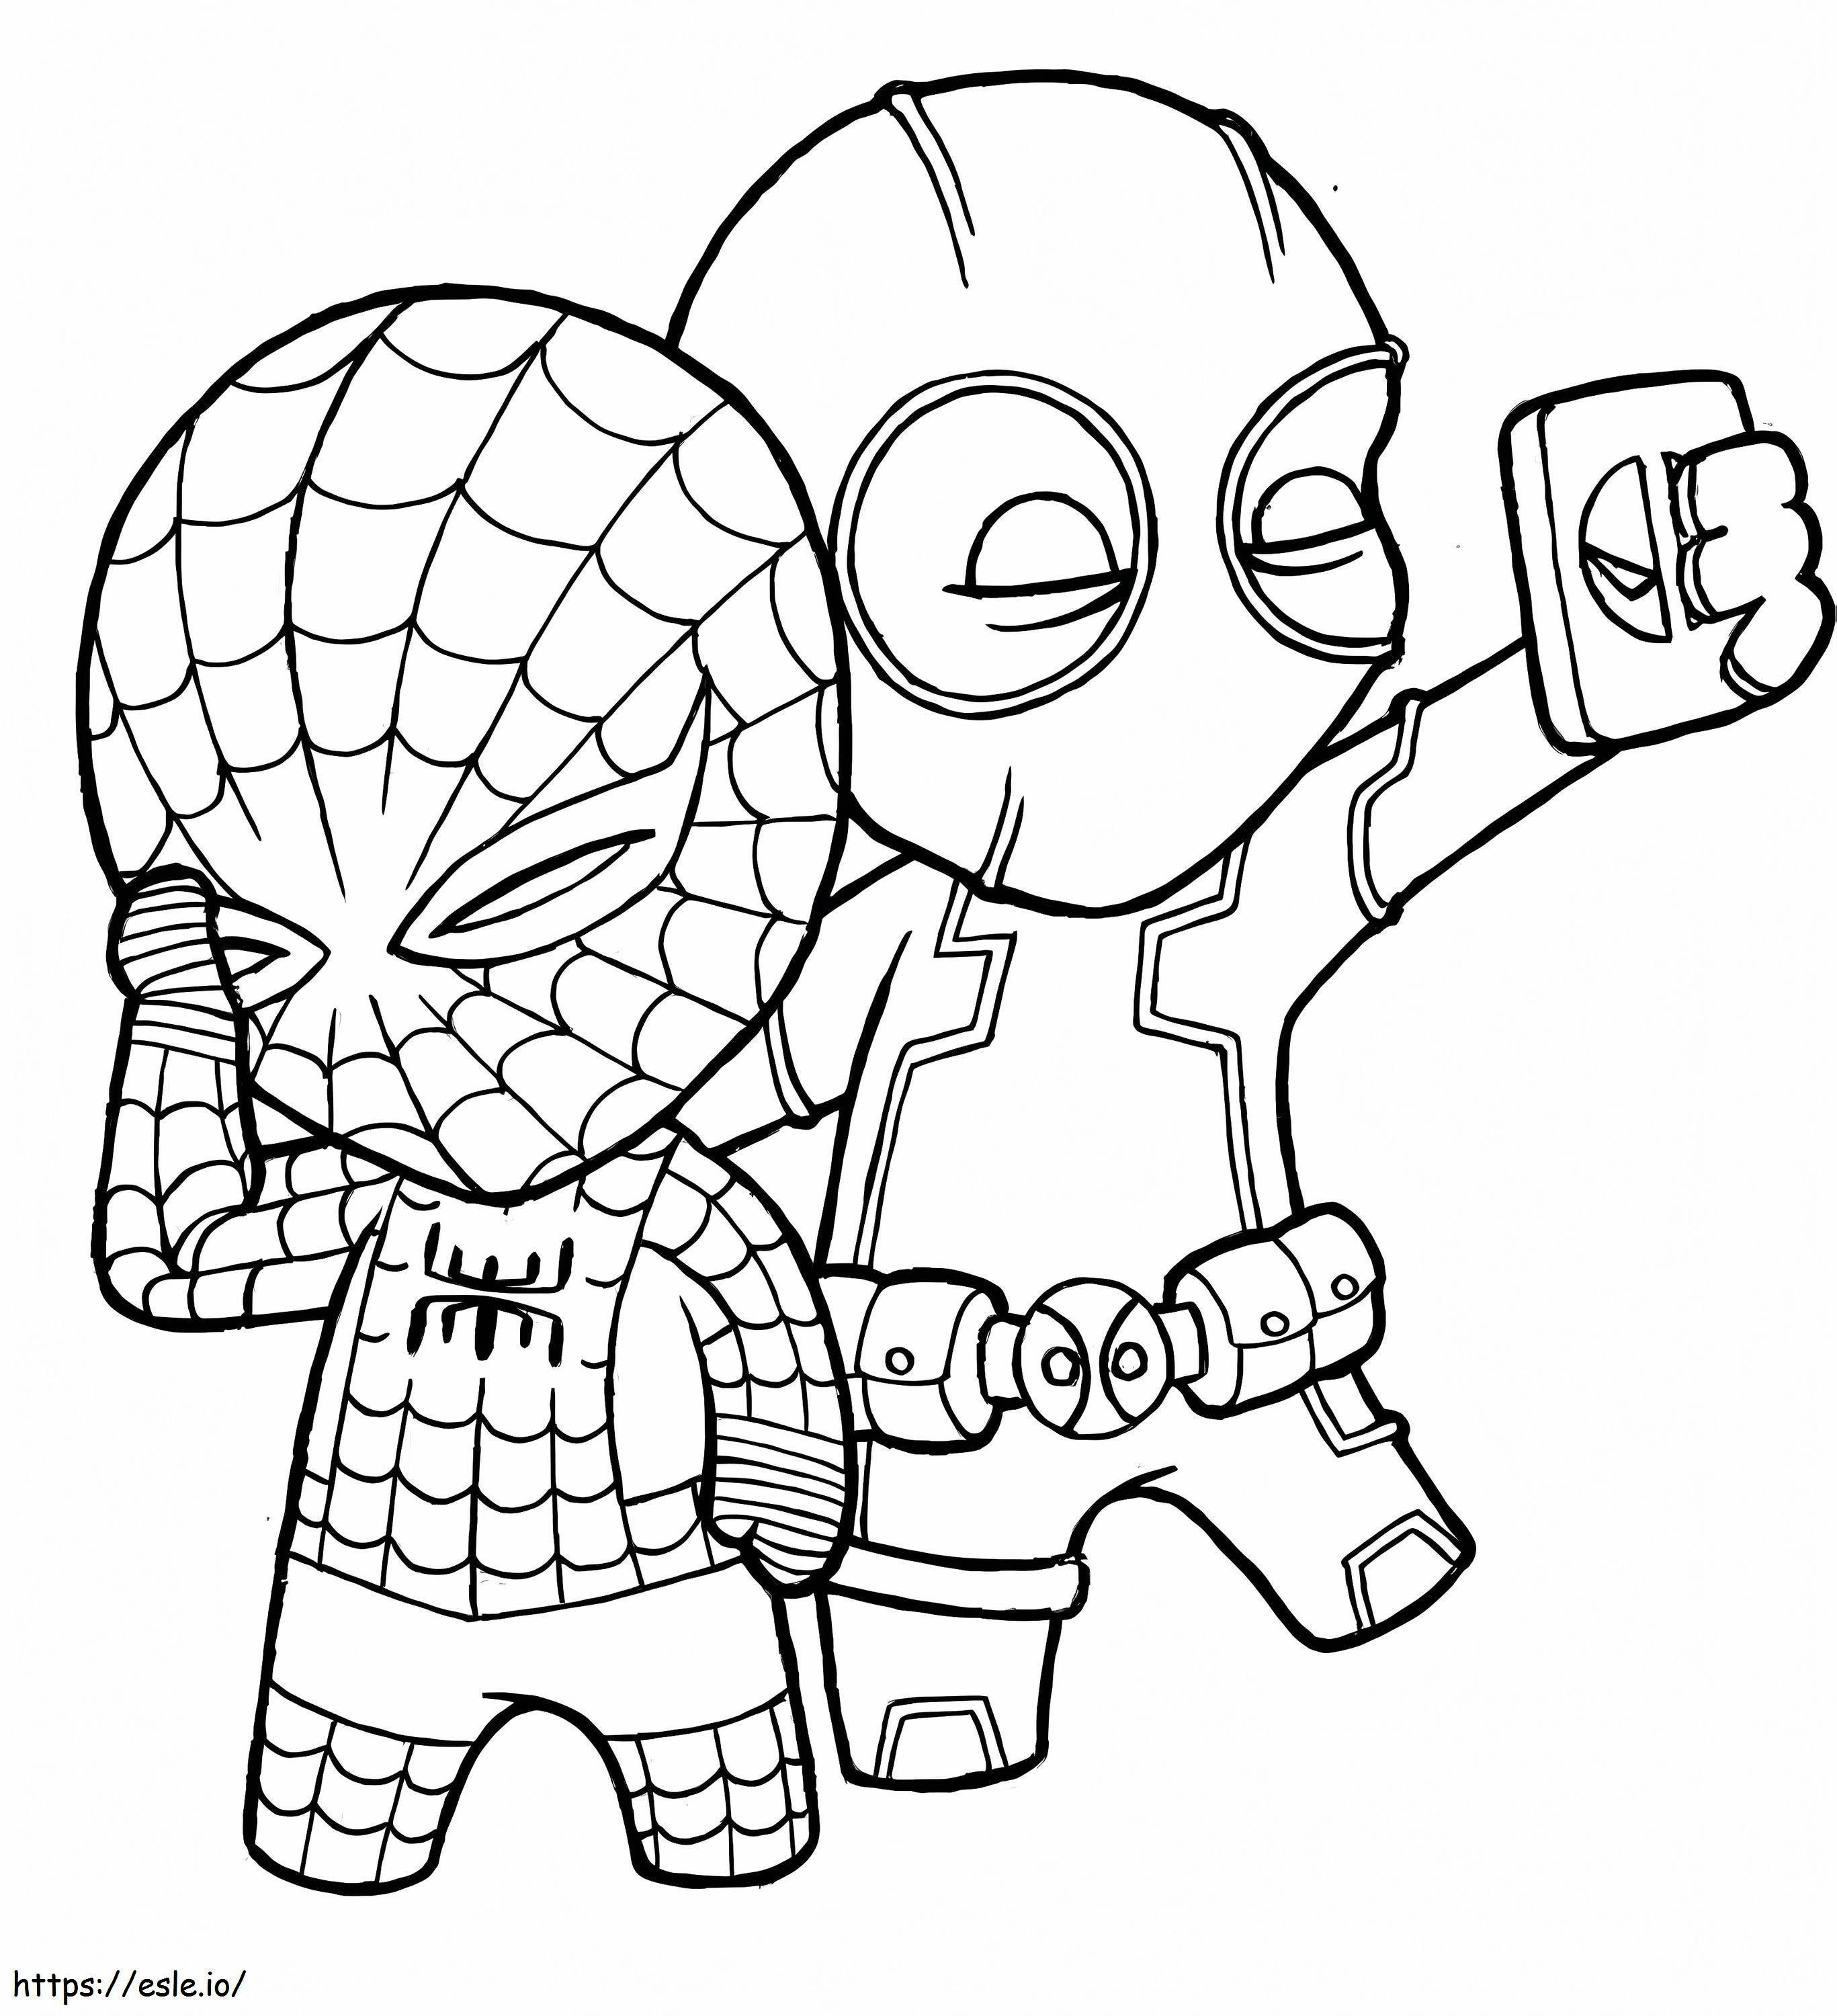 Chibi Deadpool Y Chibi Spider Man Se Toman Una Selfie coloring page